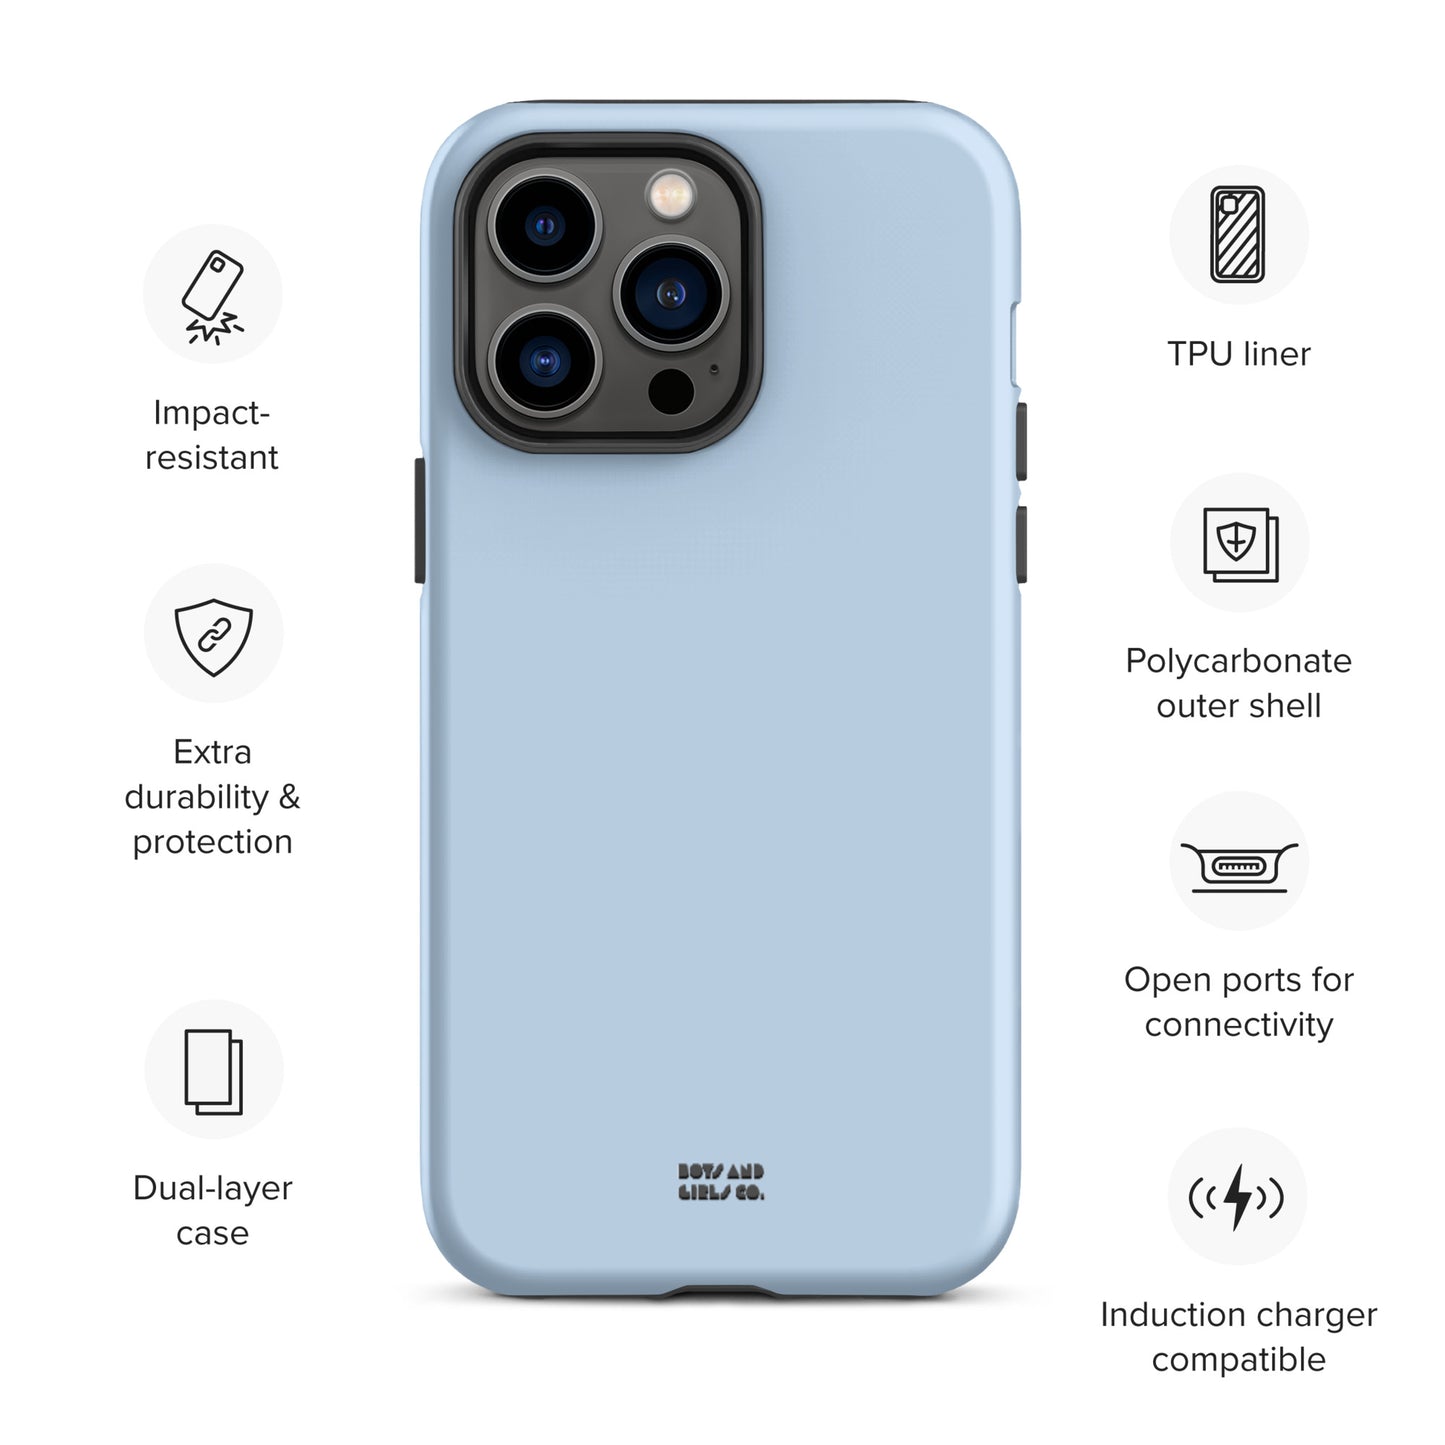 POWDER BLUE - Tough iPhone case